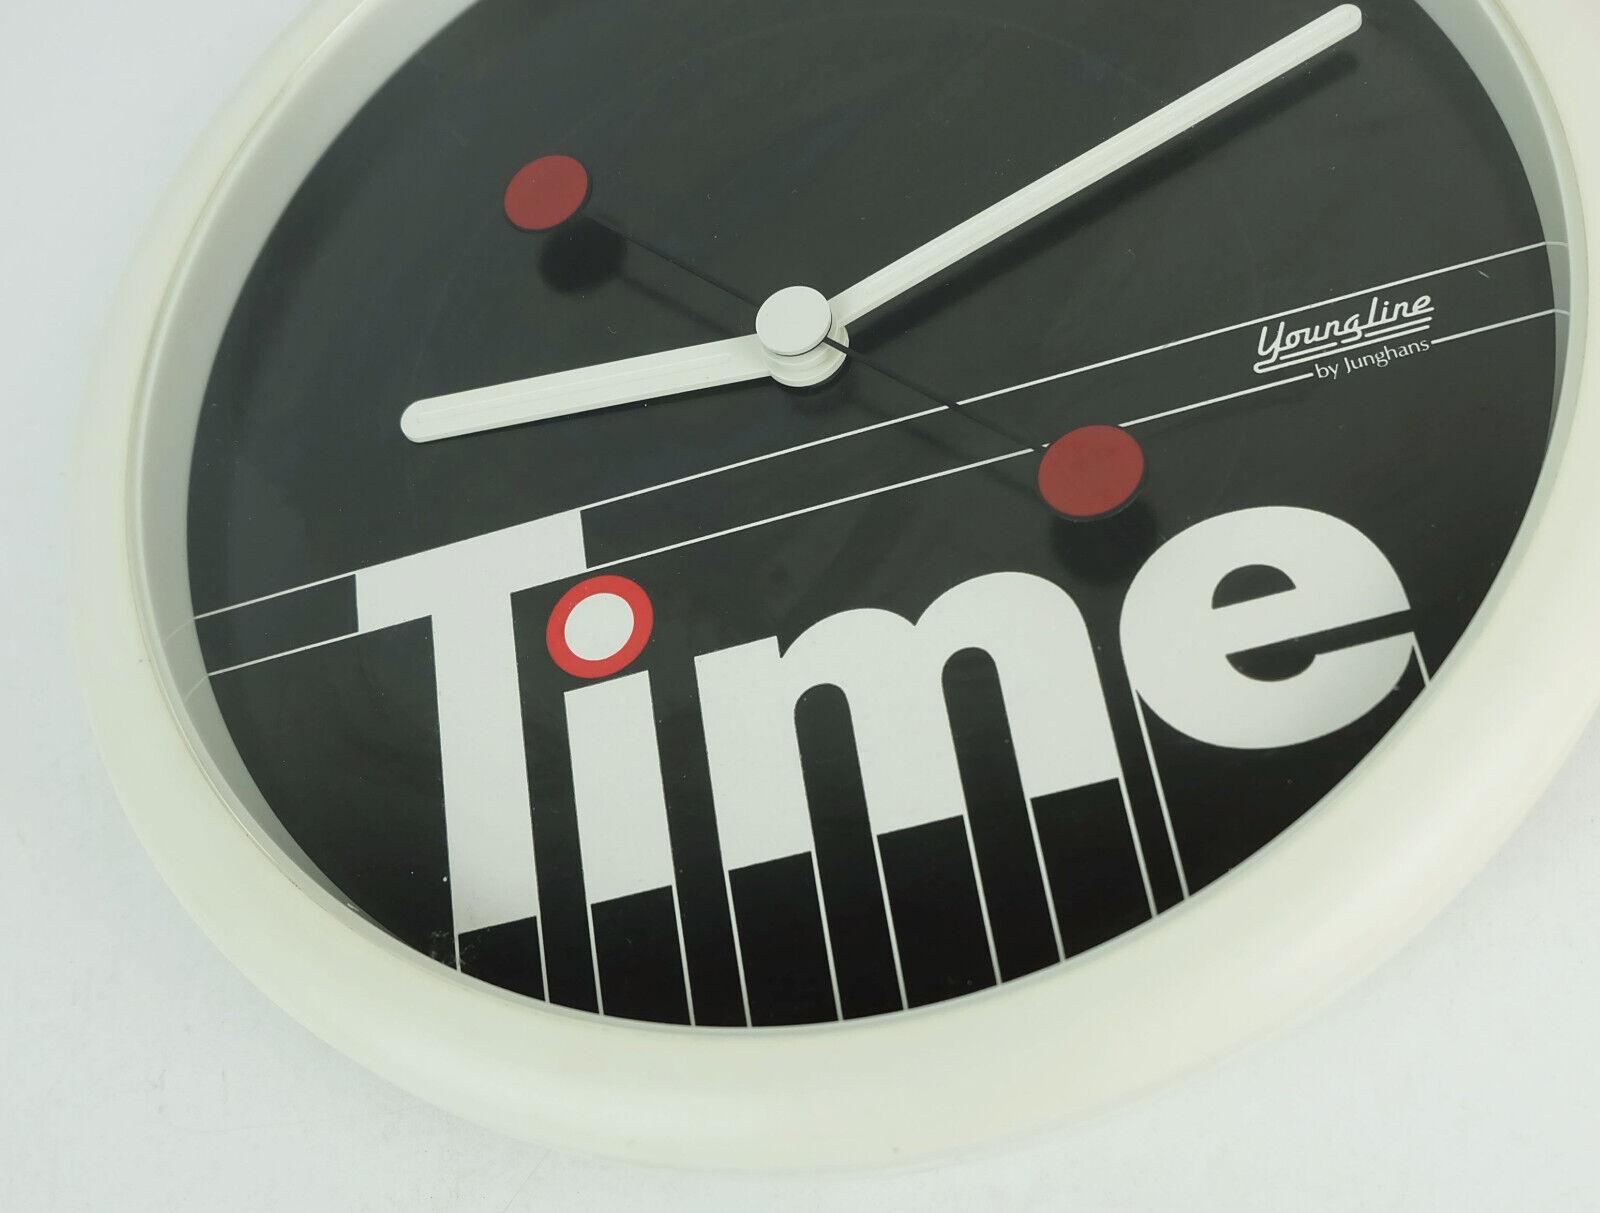 Postmoderne Rare horloge de cuisine WALL CLOCK jeuneline junghans des années 1980 au design postmoderne  en vente